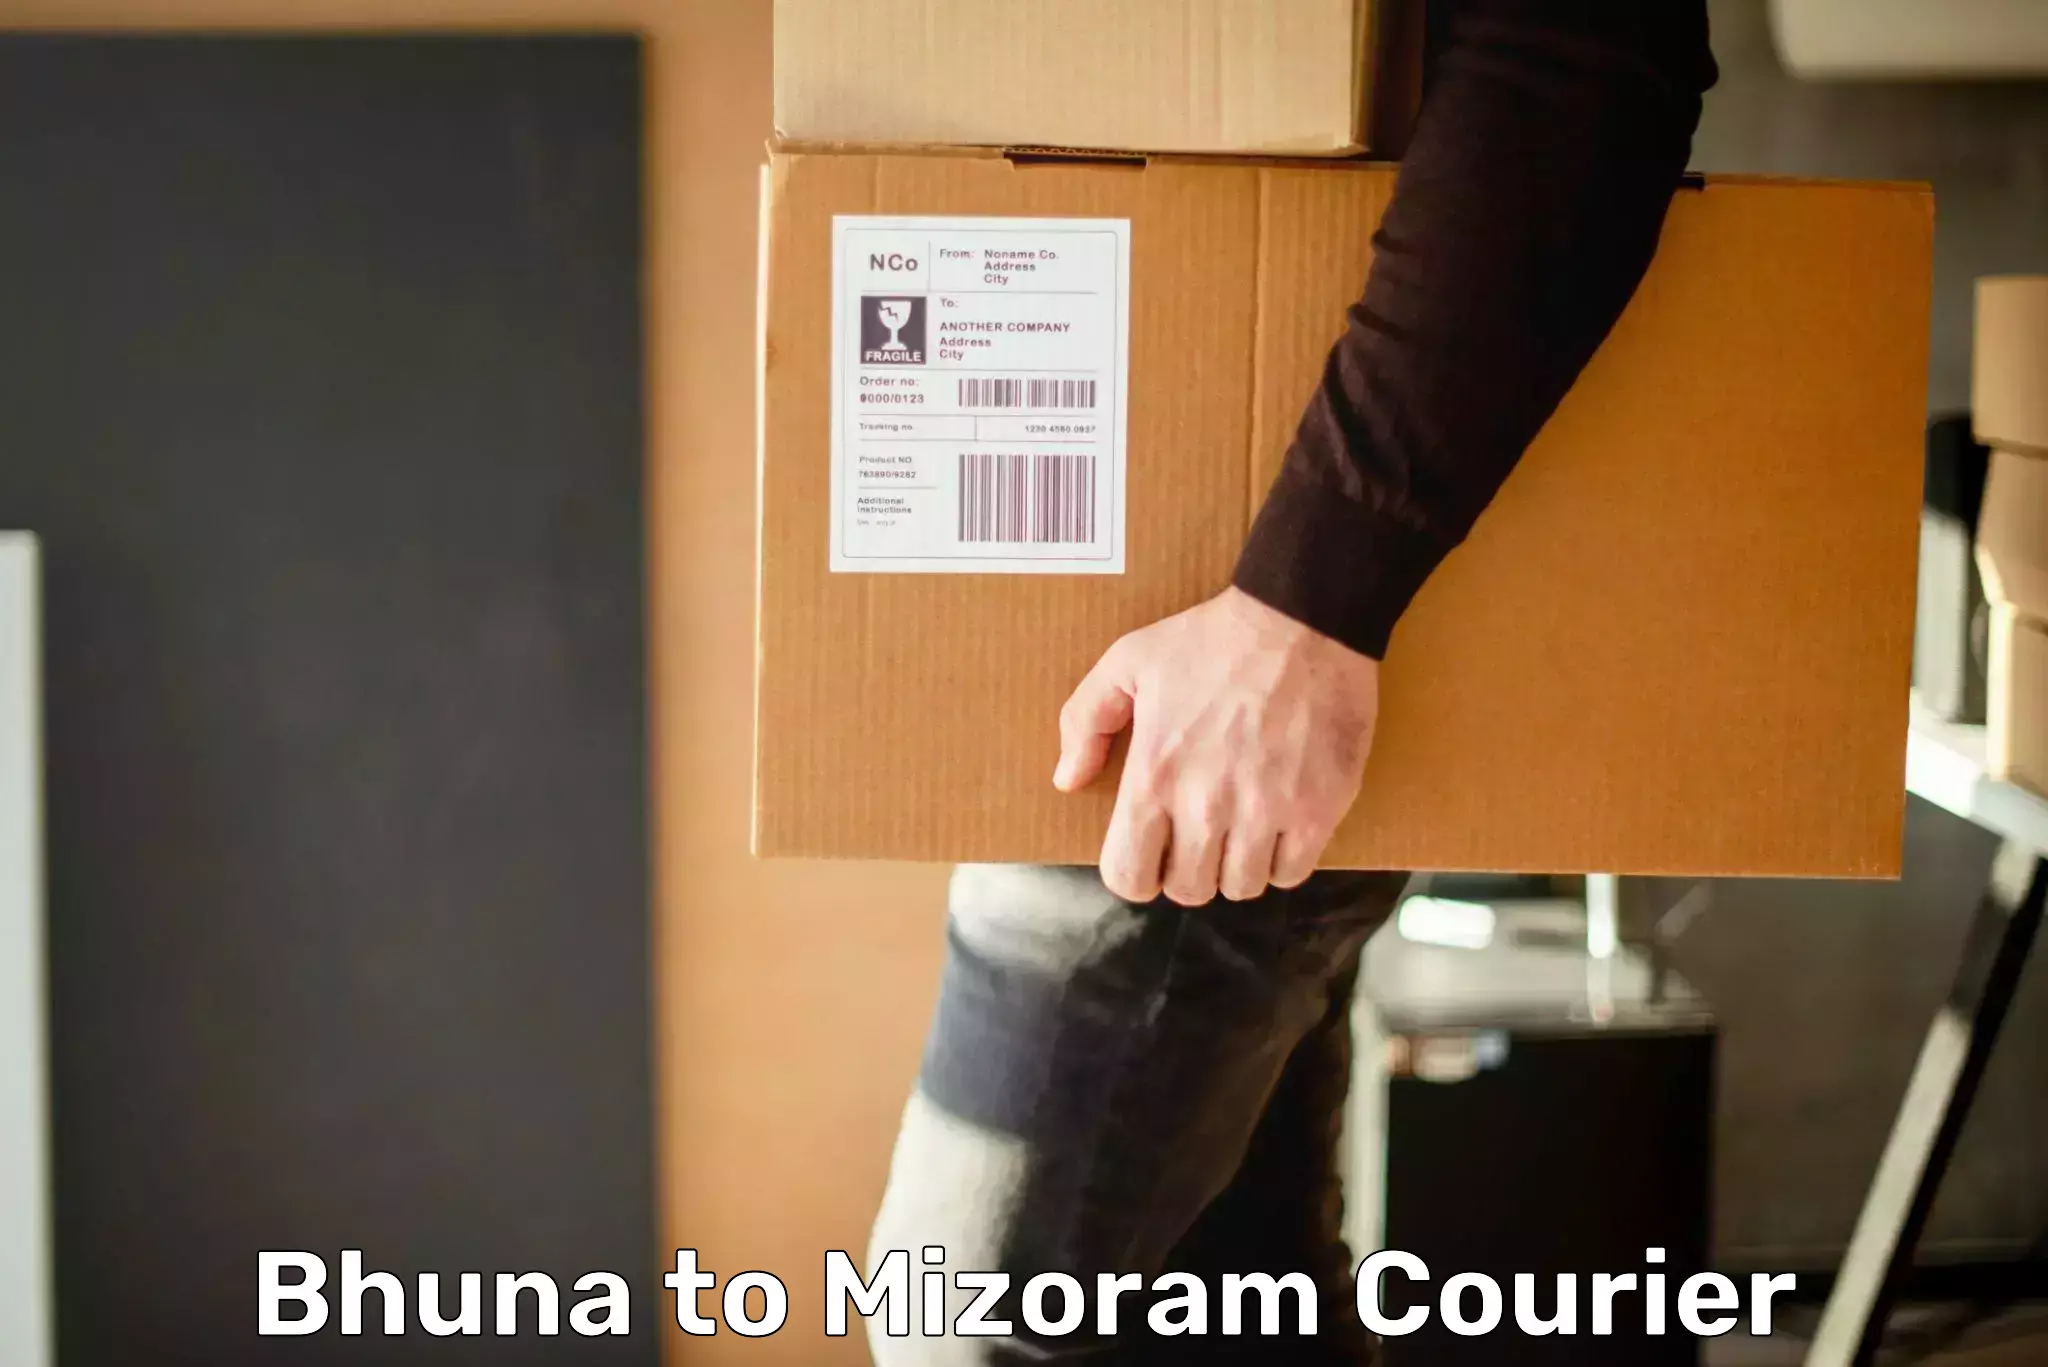 Courier app Bhuna to Mizoram